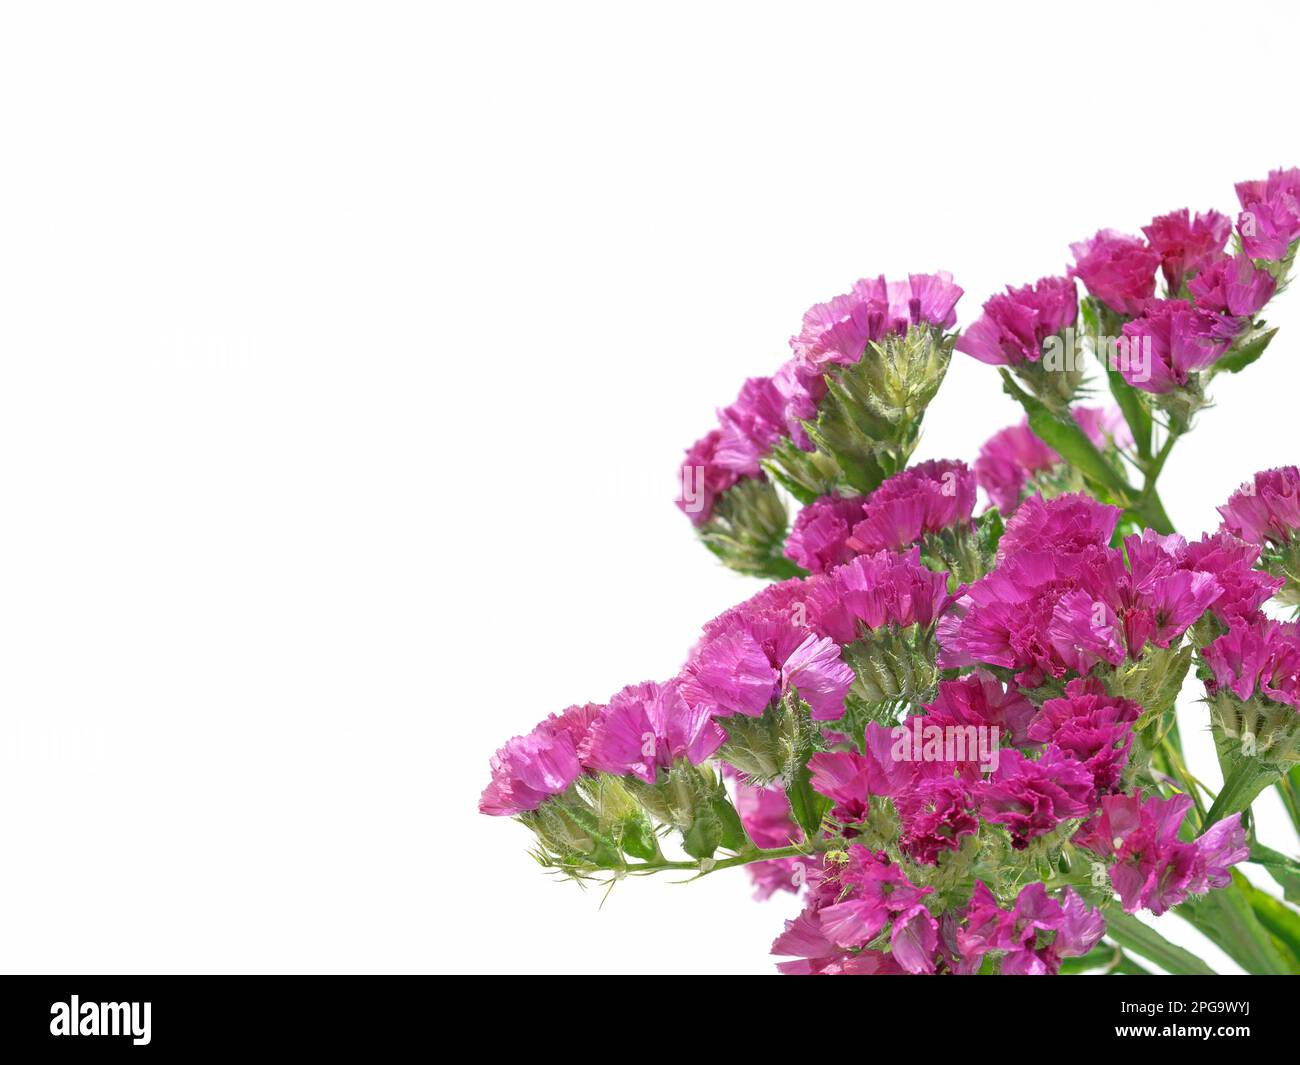 Flowering Sea Lavender, Limonium sinuatum, against a white background Stock Photo